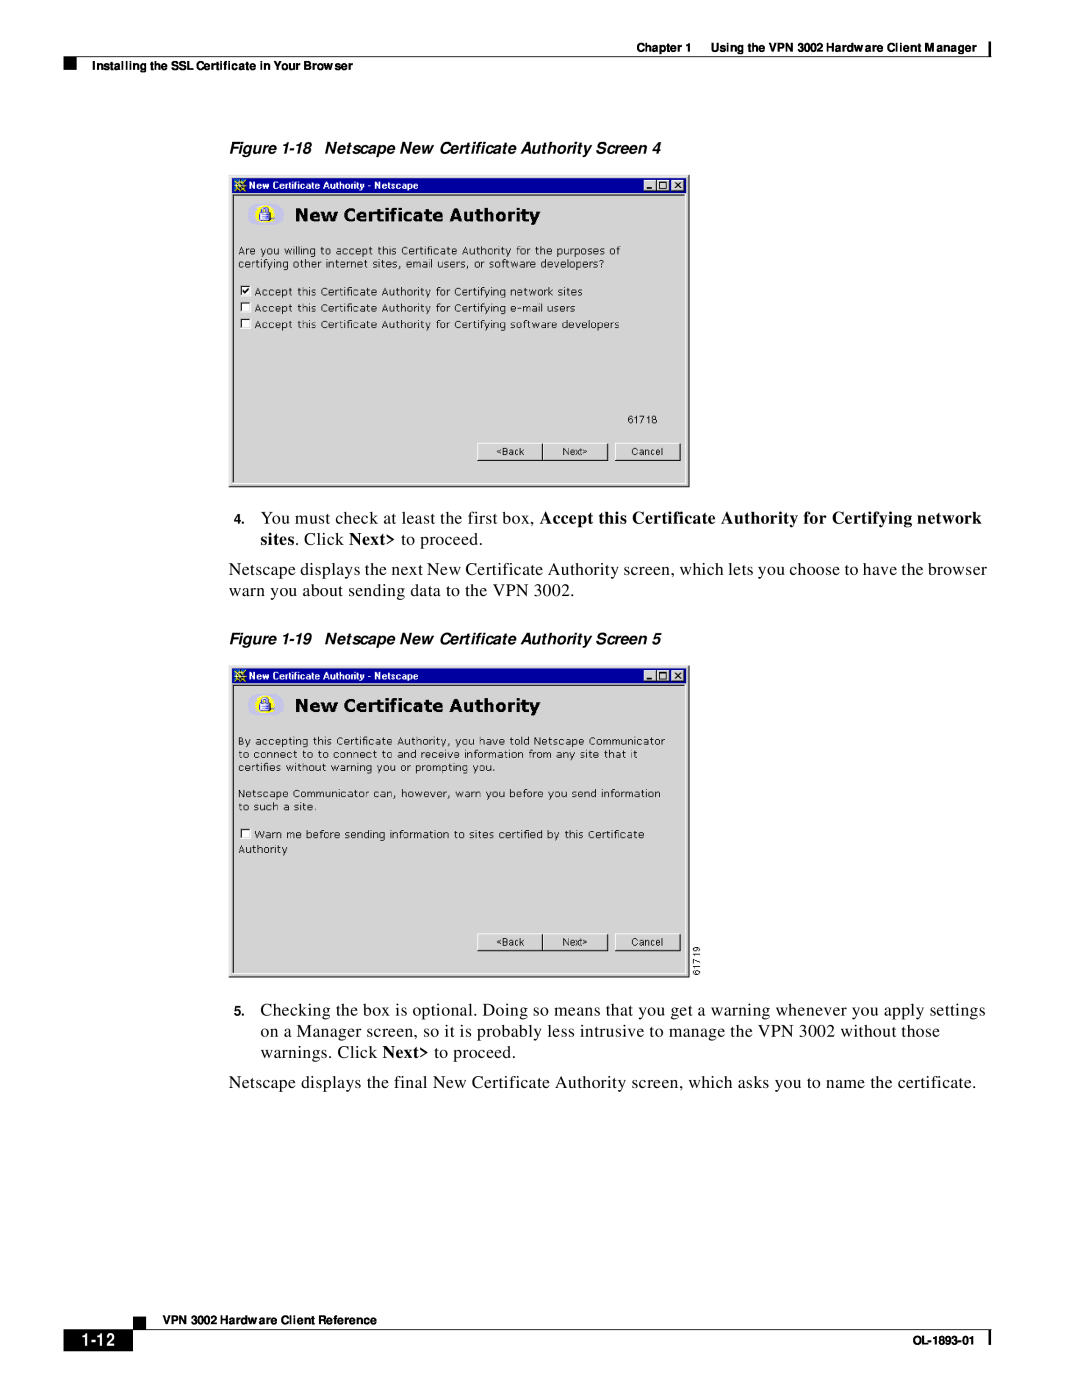 Cisco Systems VPN 3002 manual 1-12 